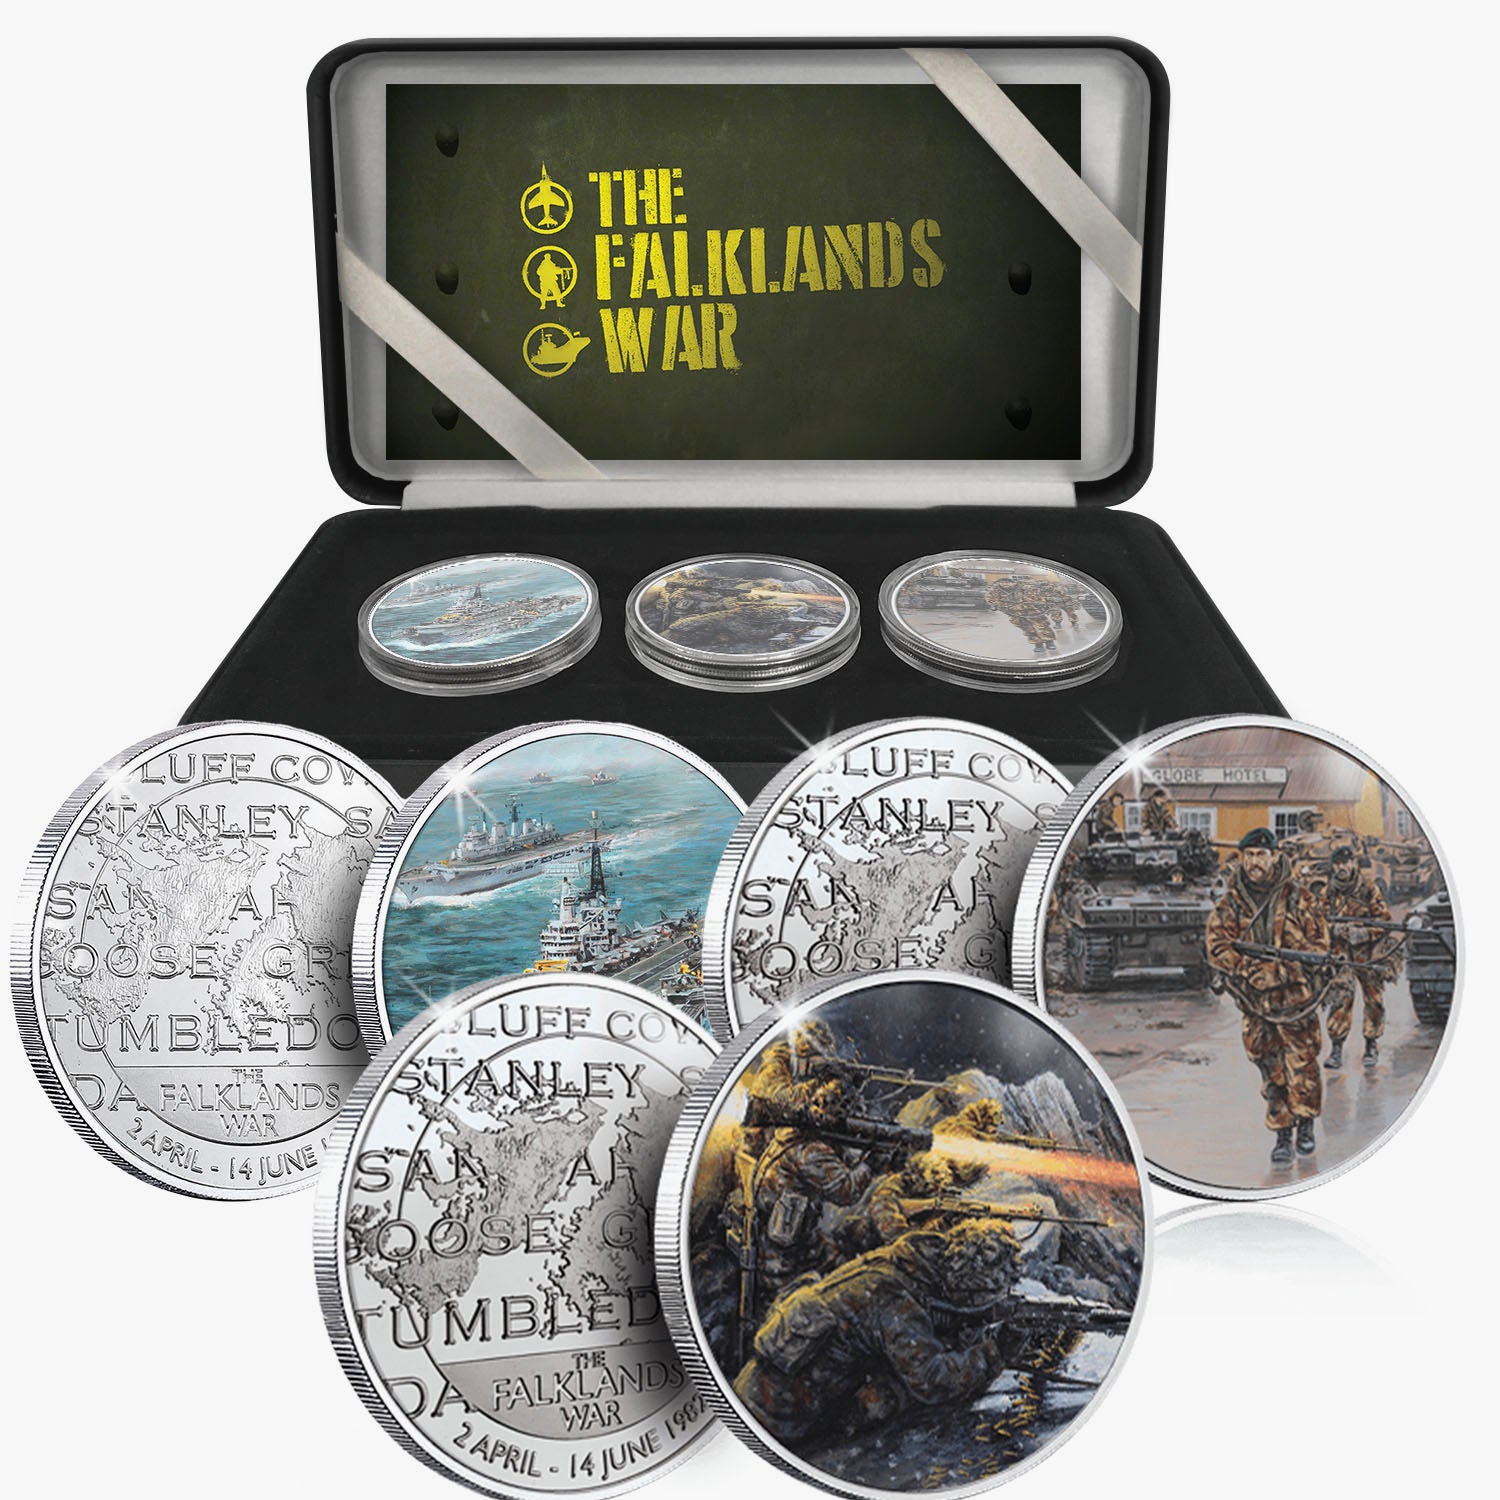 The Falklands War 40th Anniversary Box Set Edition